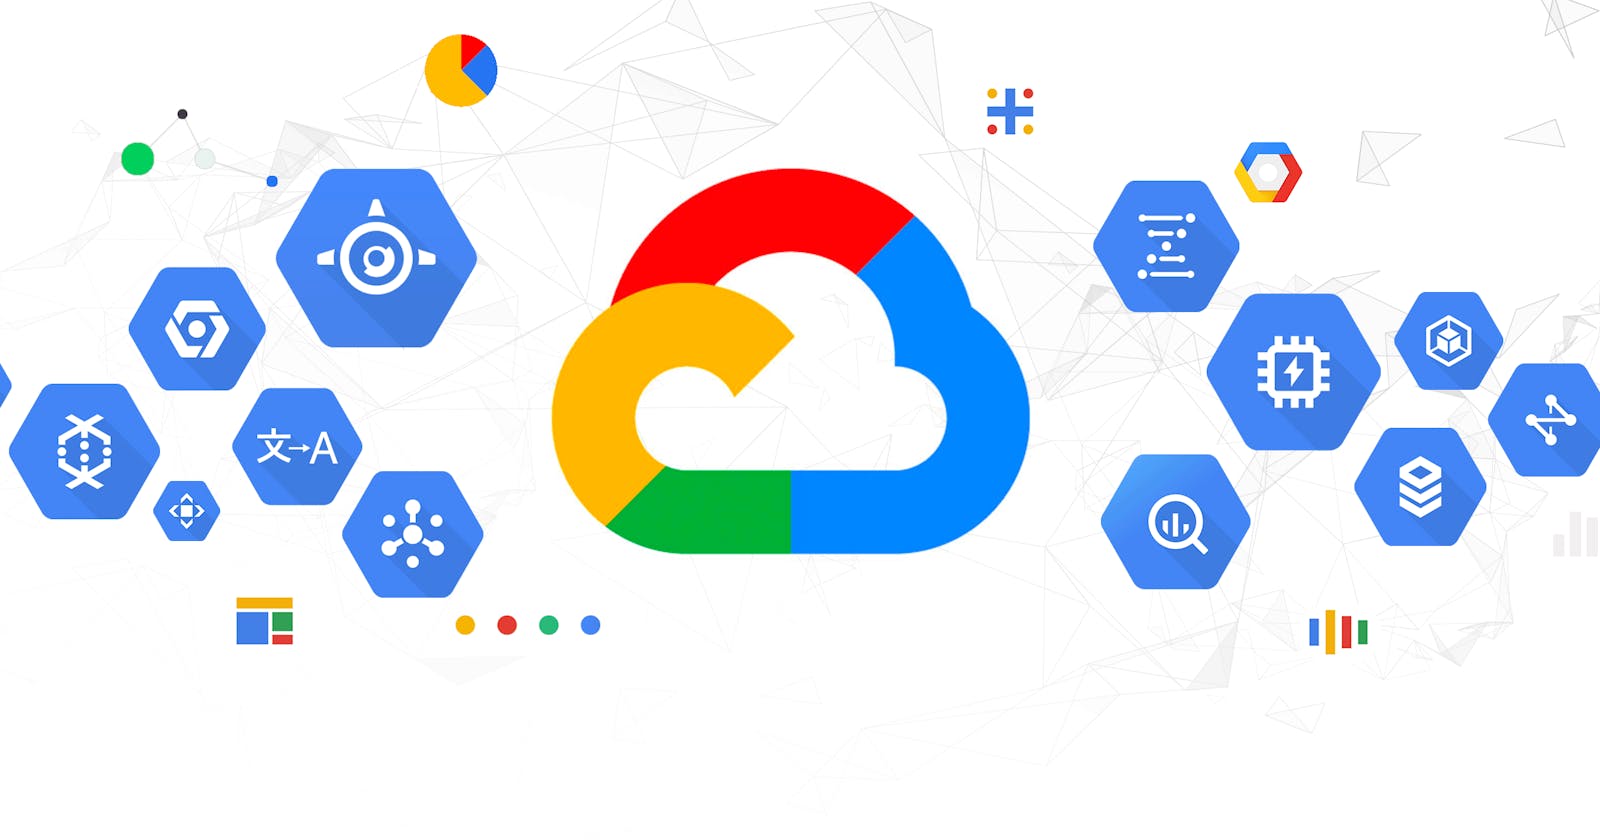 Hosting a static website on Google Cloud Storage